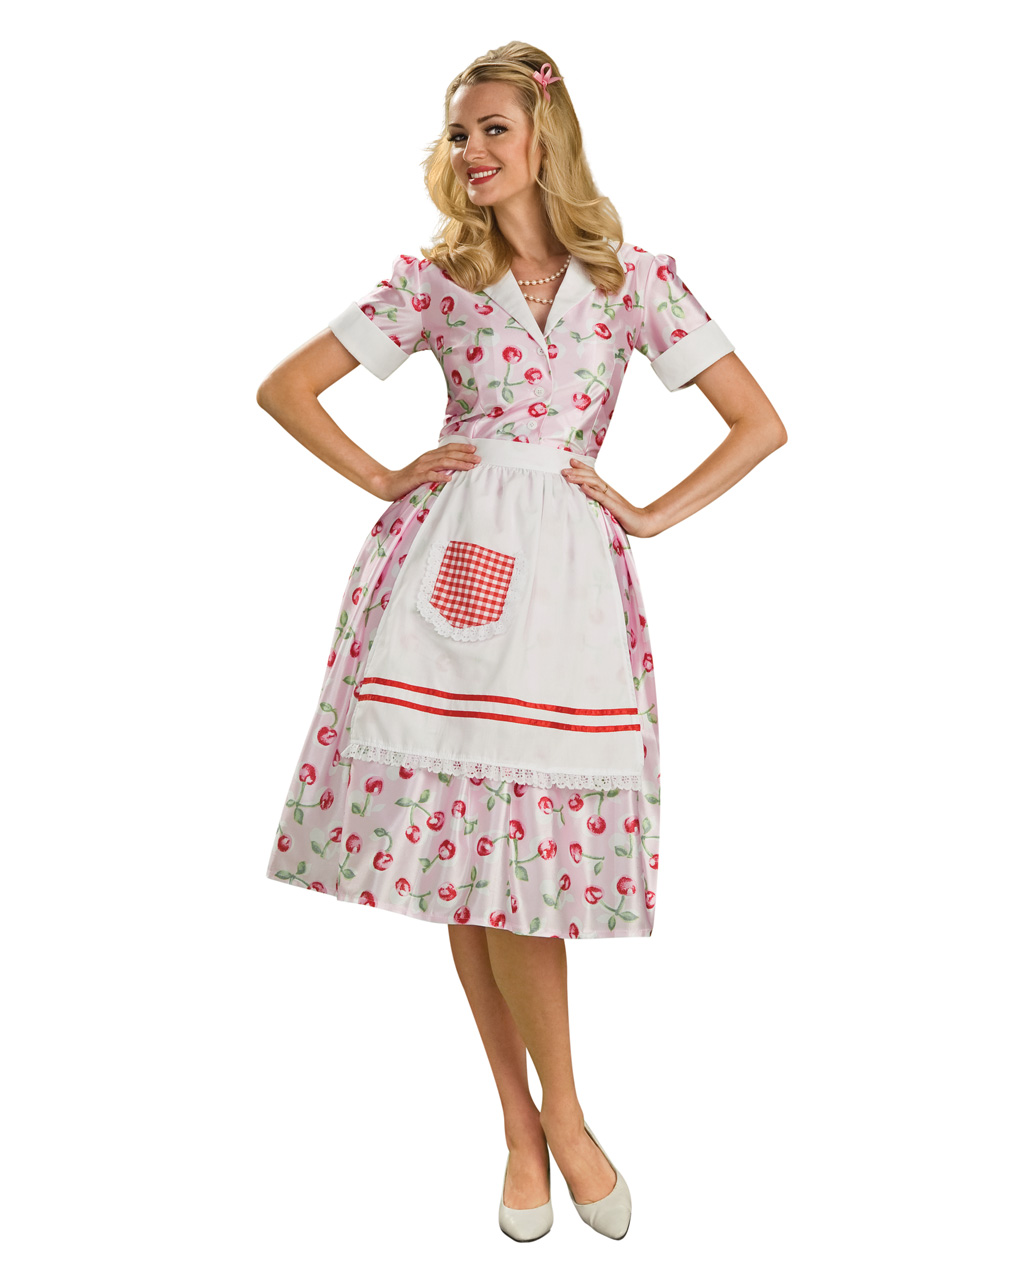 Buy > 50s housewife dress > in stock